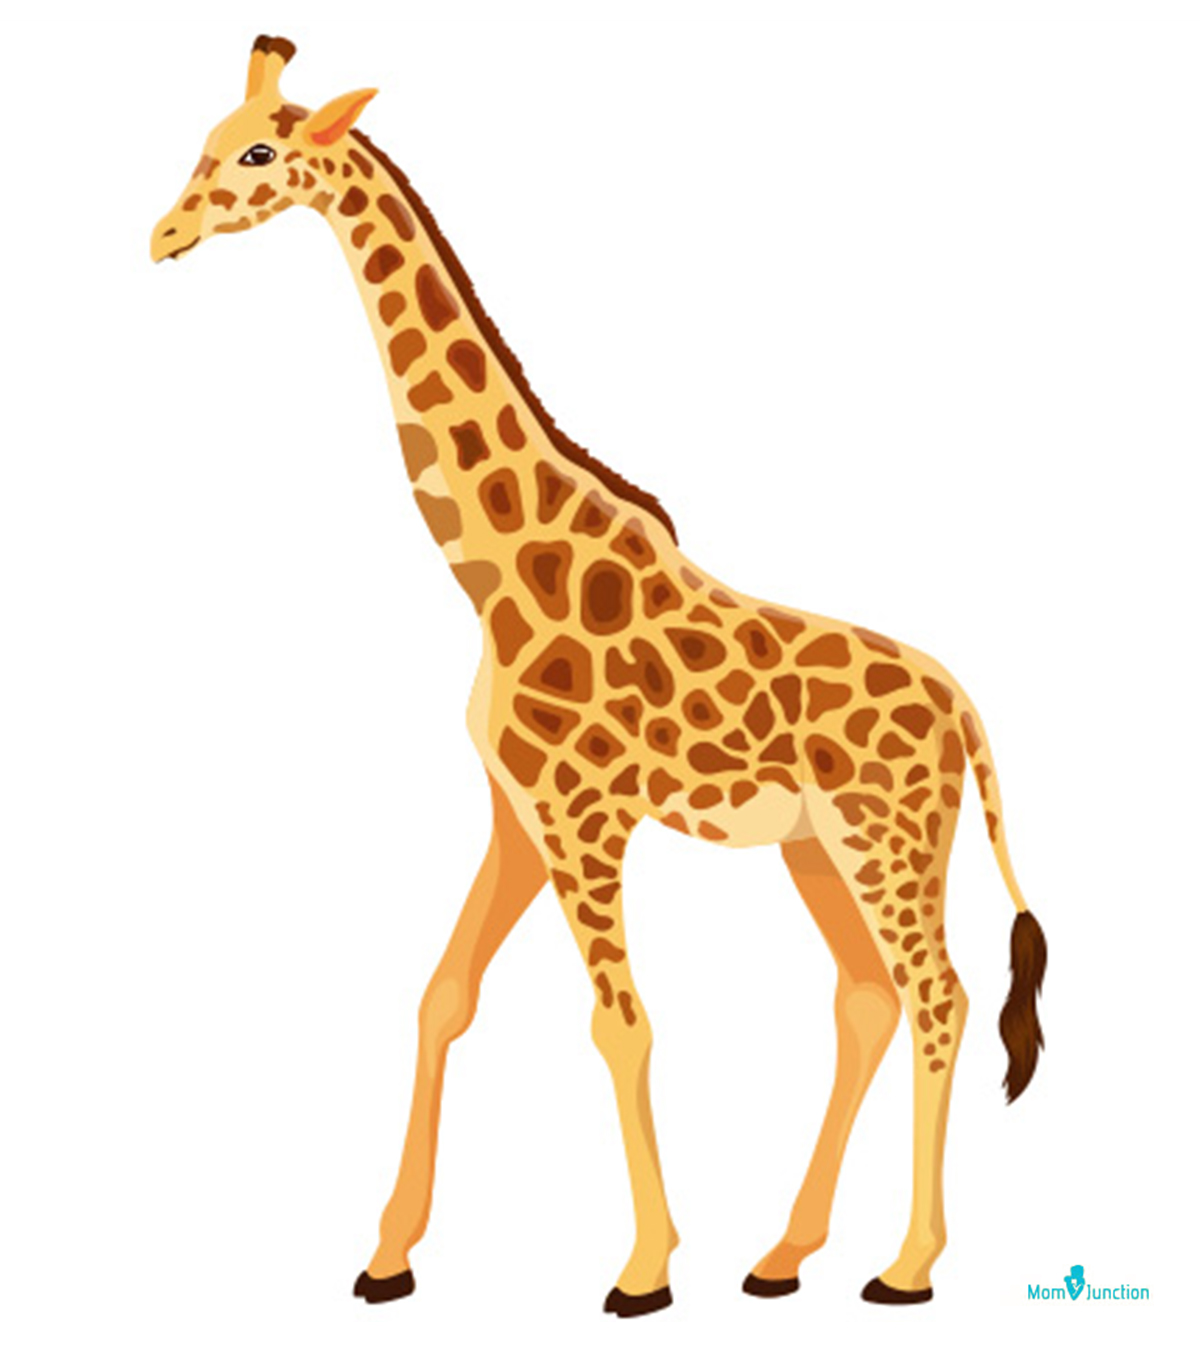 10895 Giraffe Outline Images Stock Photos  Vectors  Shutterstock